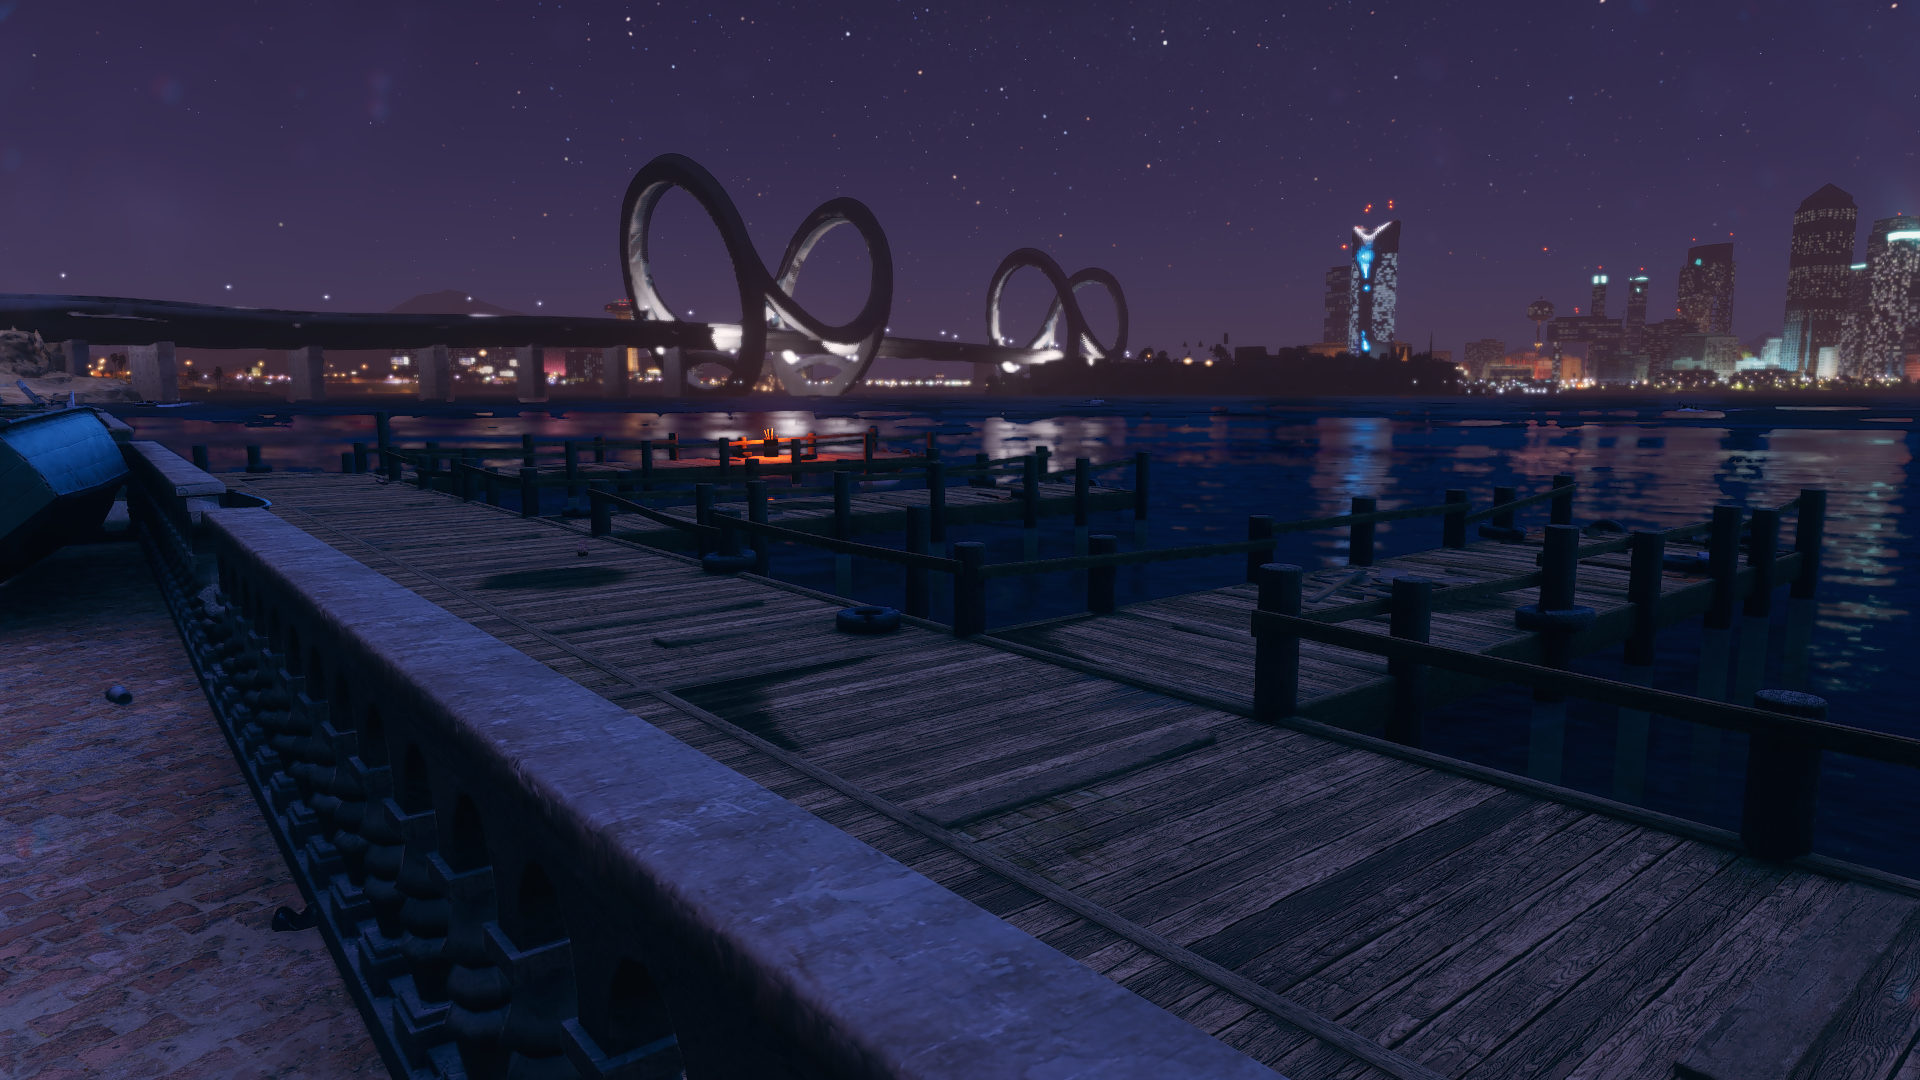 Wooden docks with large illuminated bridge in the background